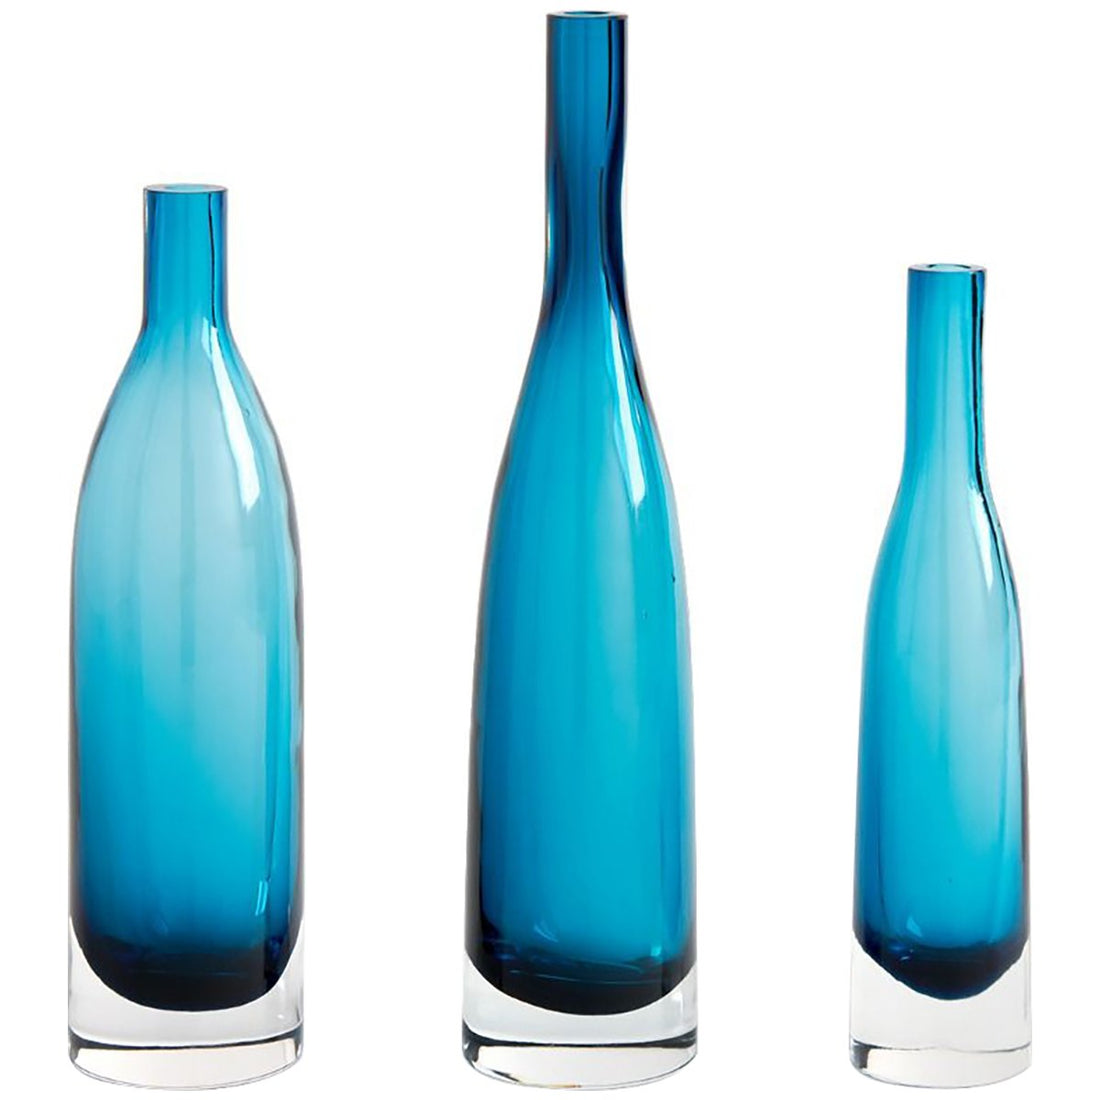 Villa & House Botella Set of 3 Vases